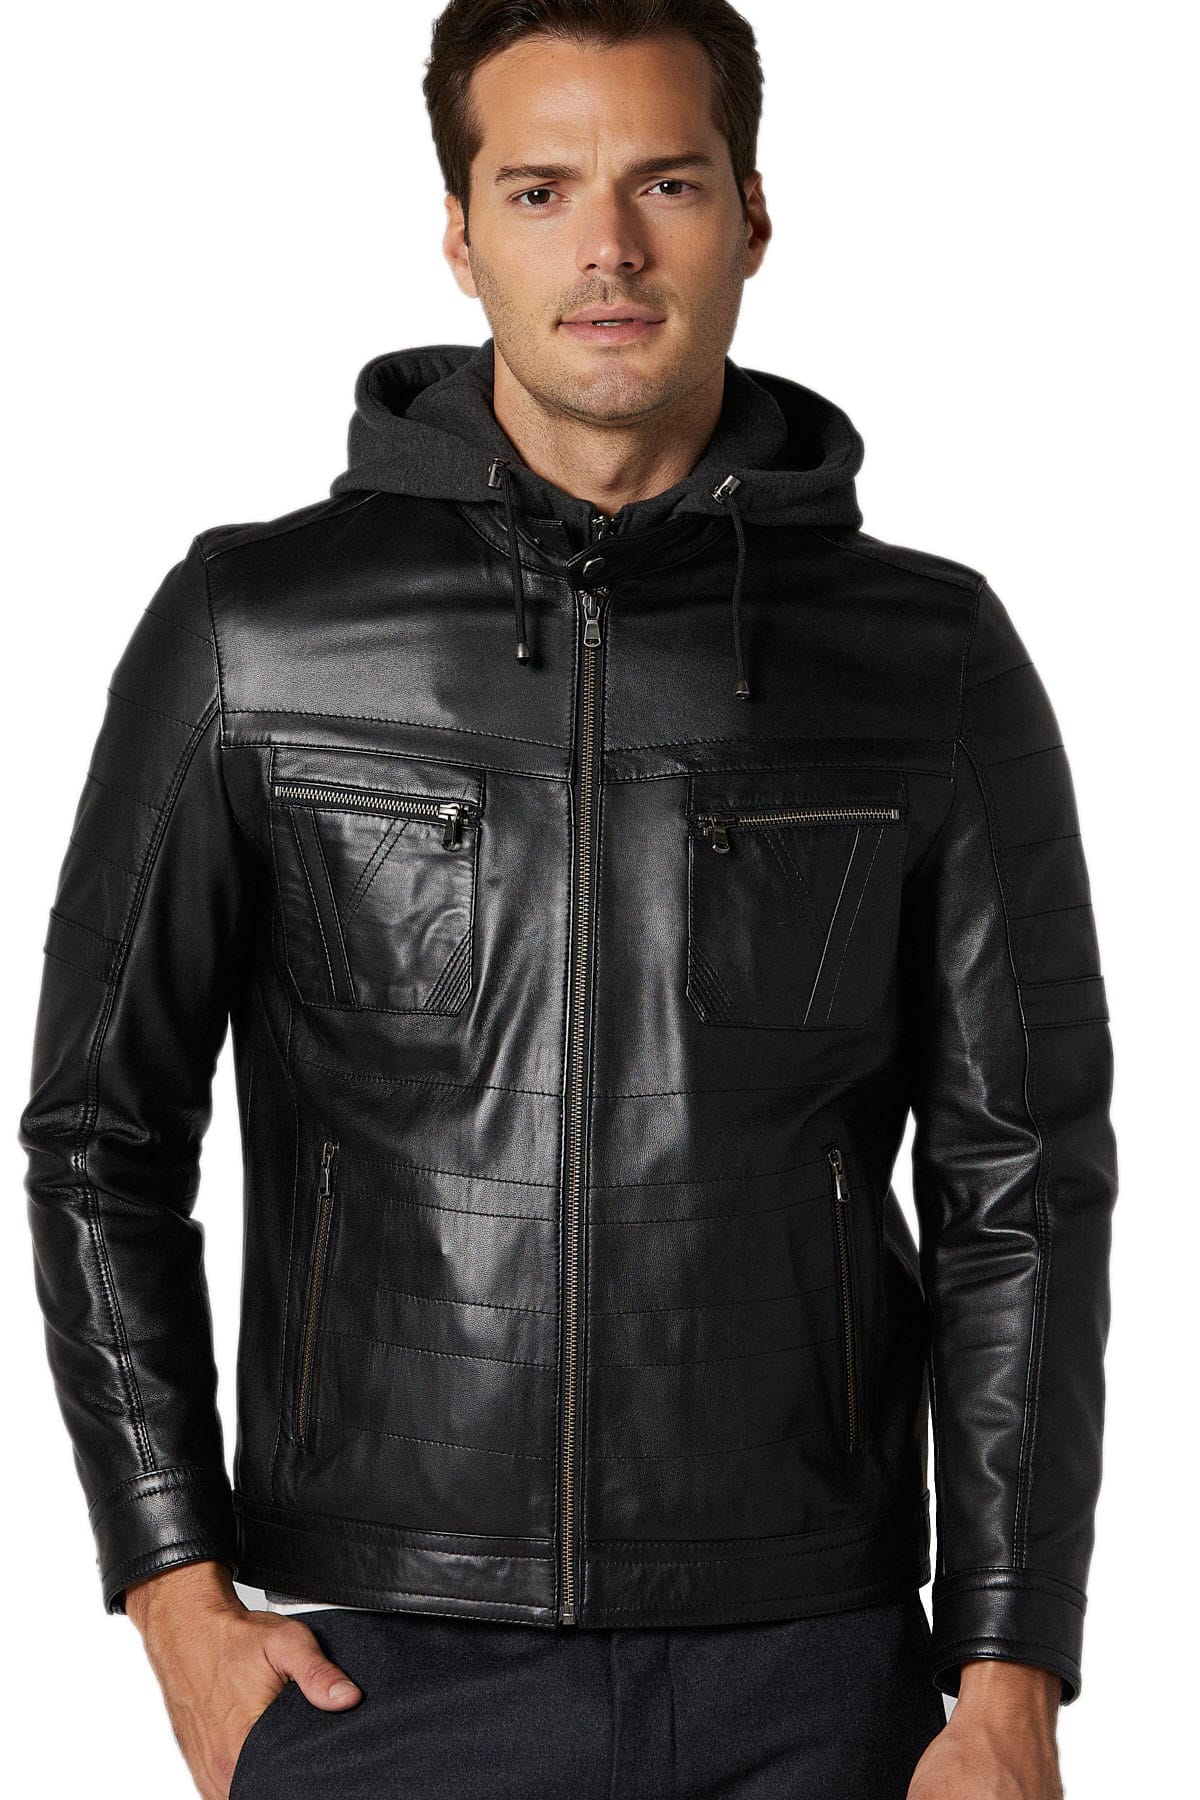 Mens Hooded Fashion Leather Jacket in Biker Style - Black Hoodie Jacket